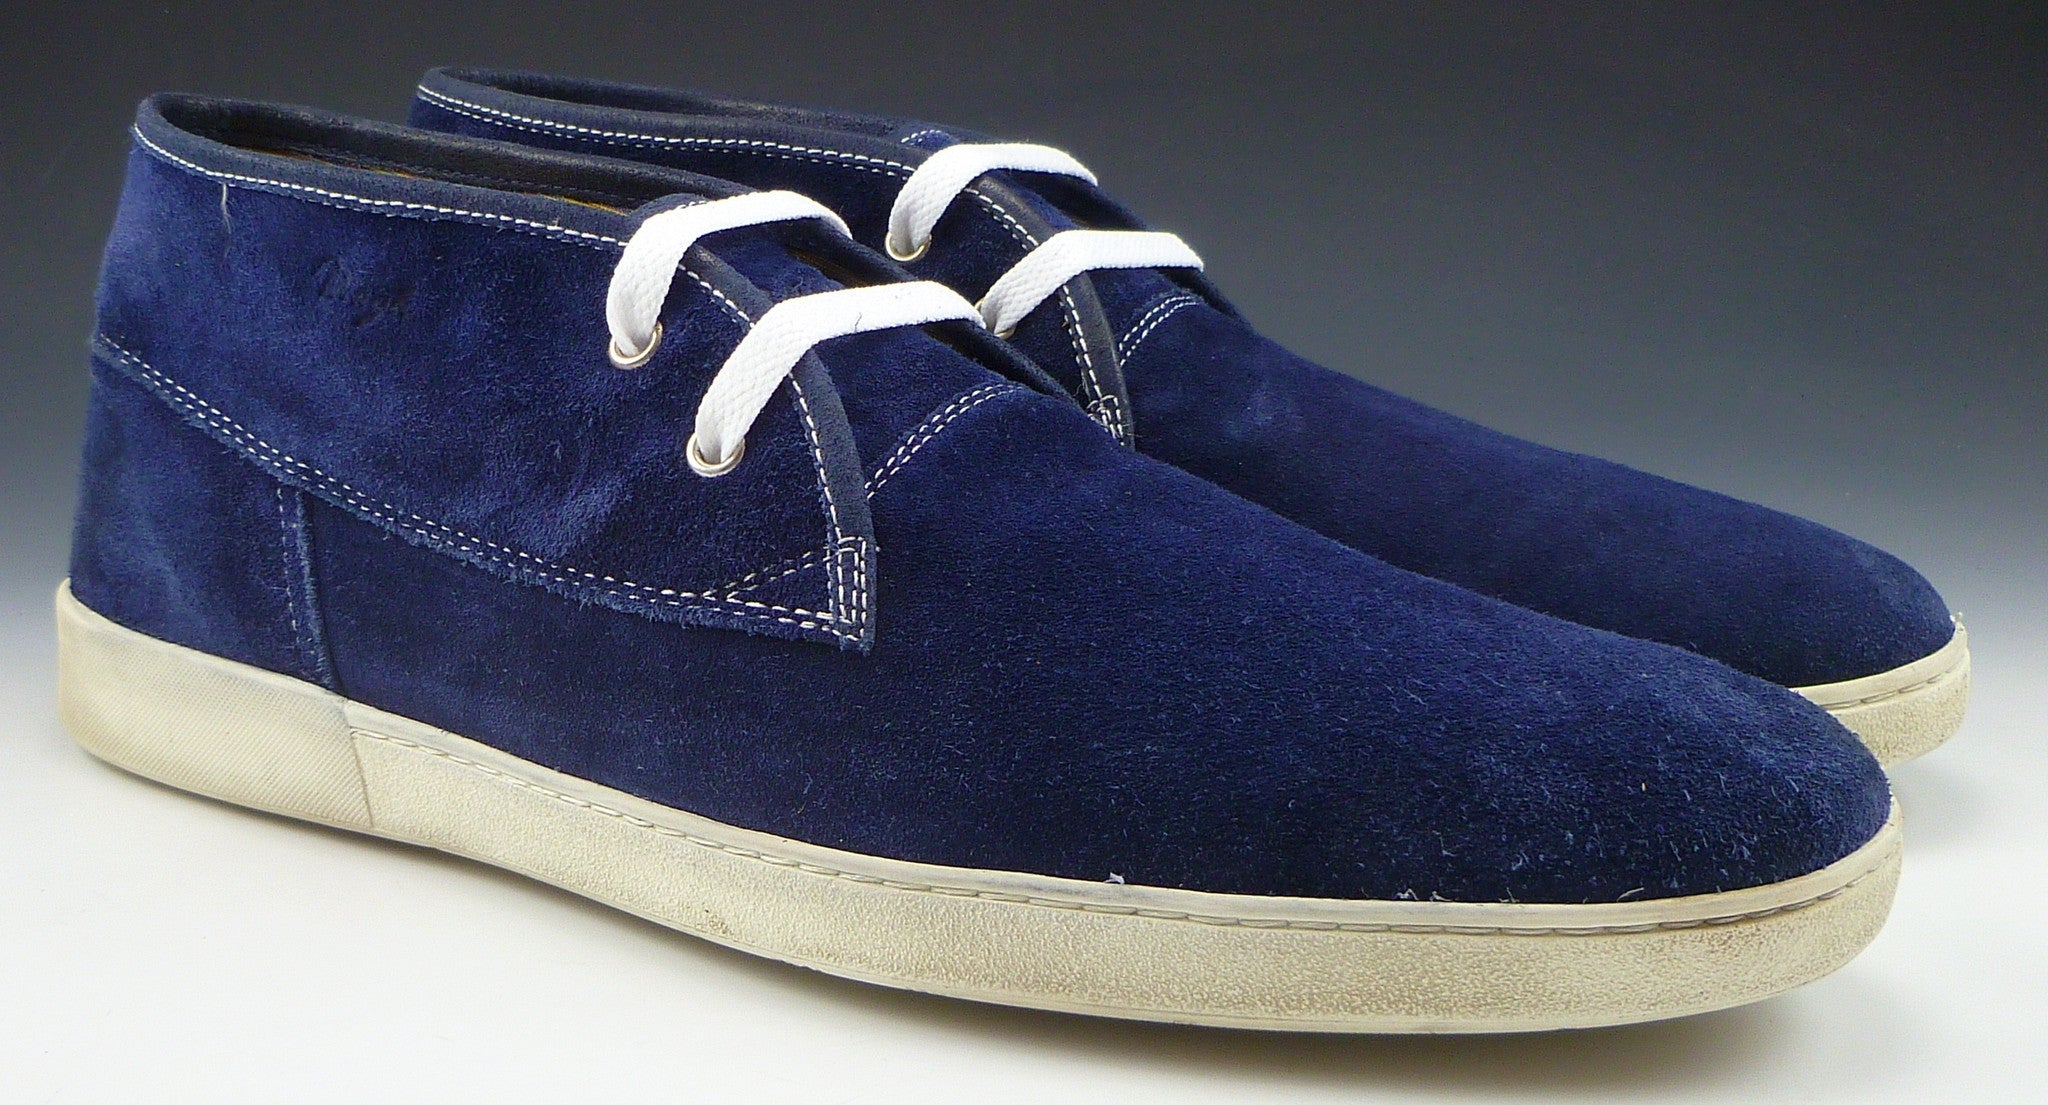 bruno magli blue suede shoes